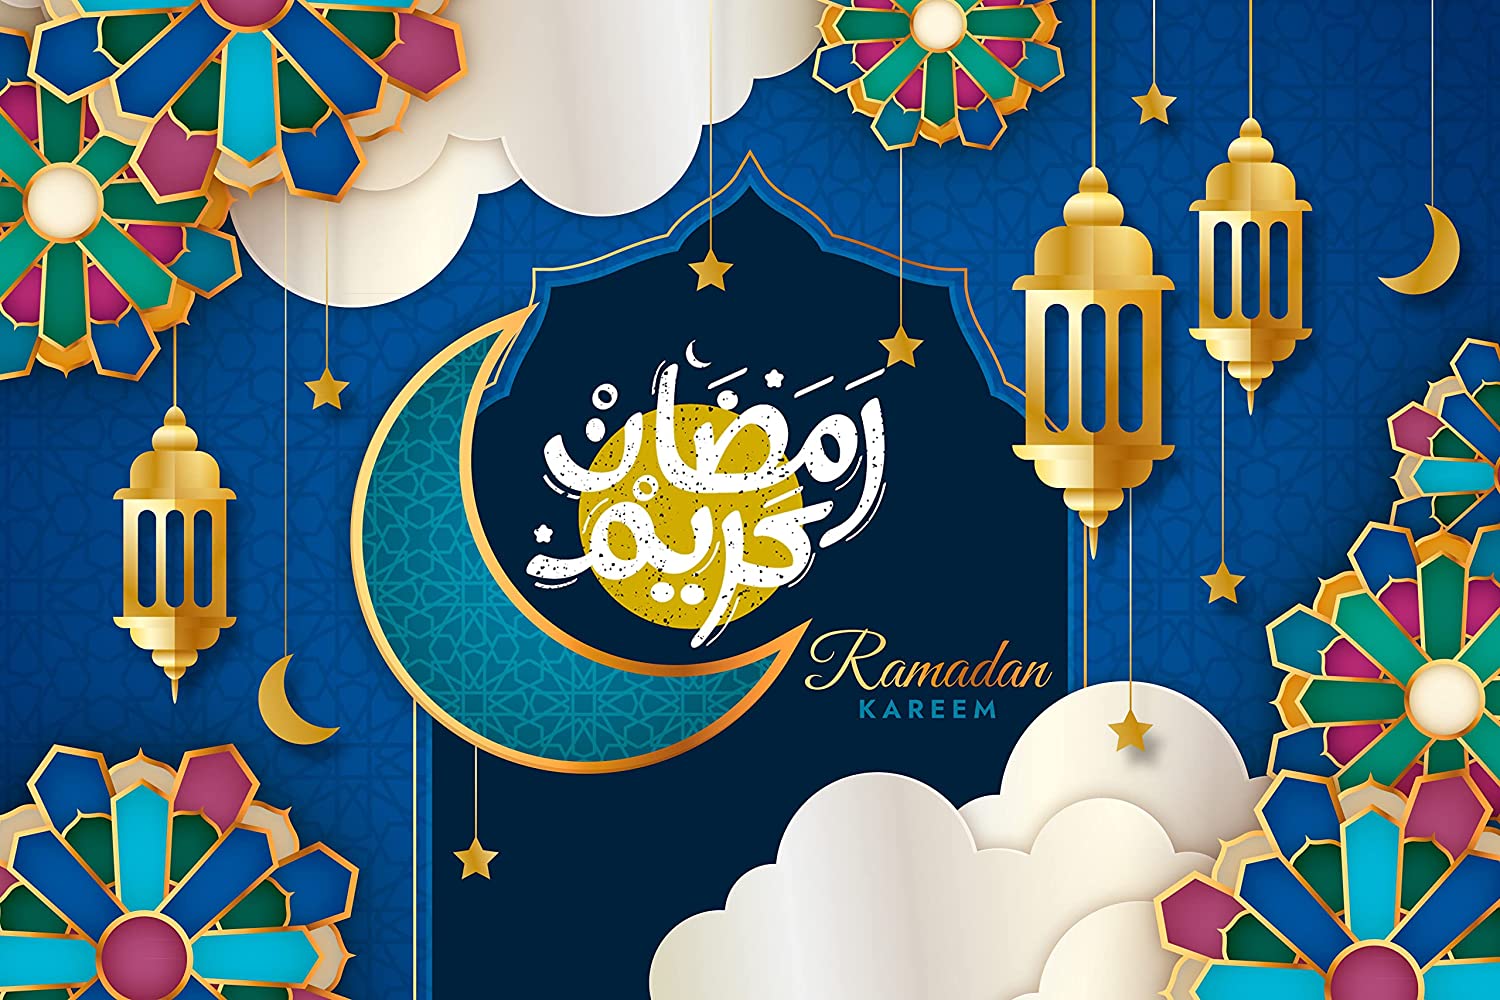 Ramadan decorations poster, large size